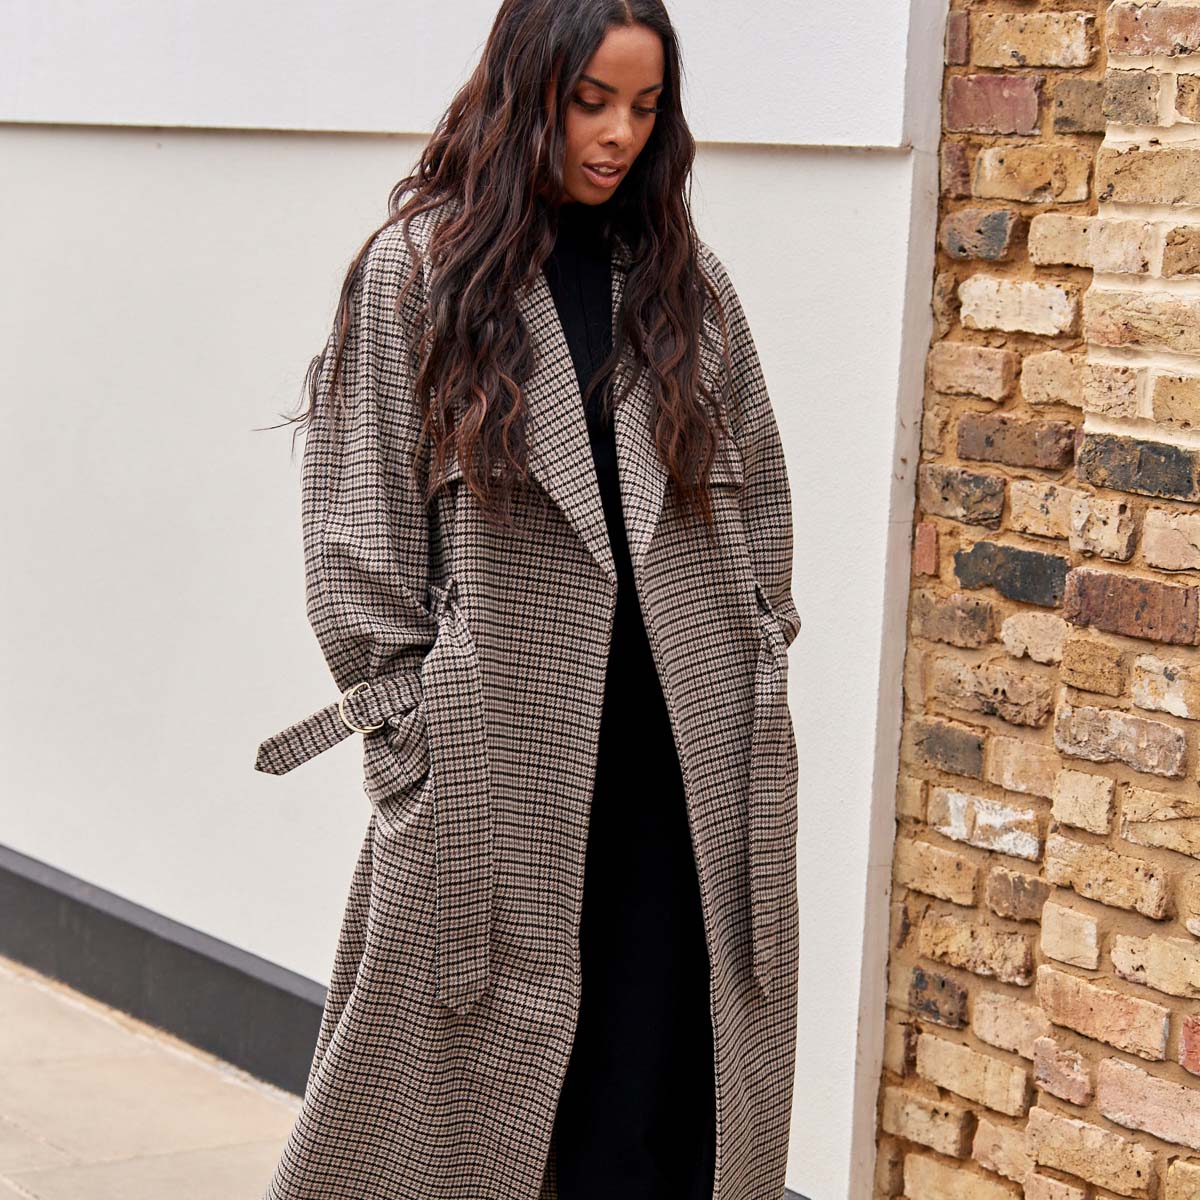 A Women's guide to fashionable winter coats | Next UK